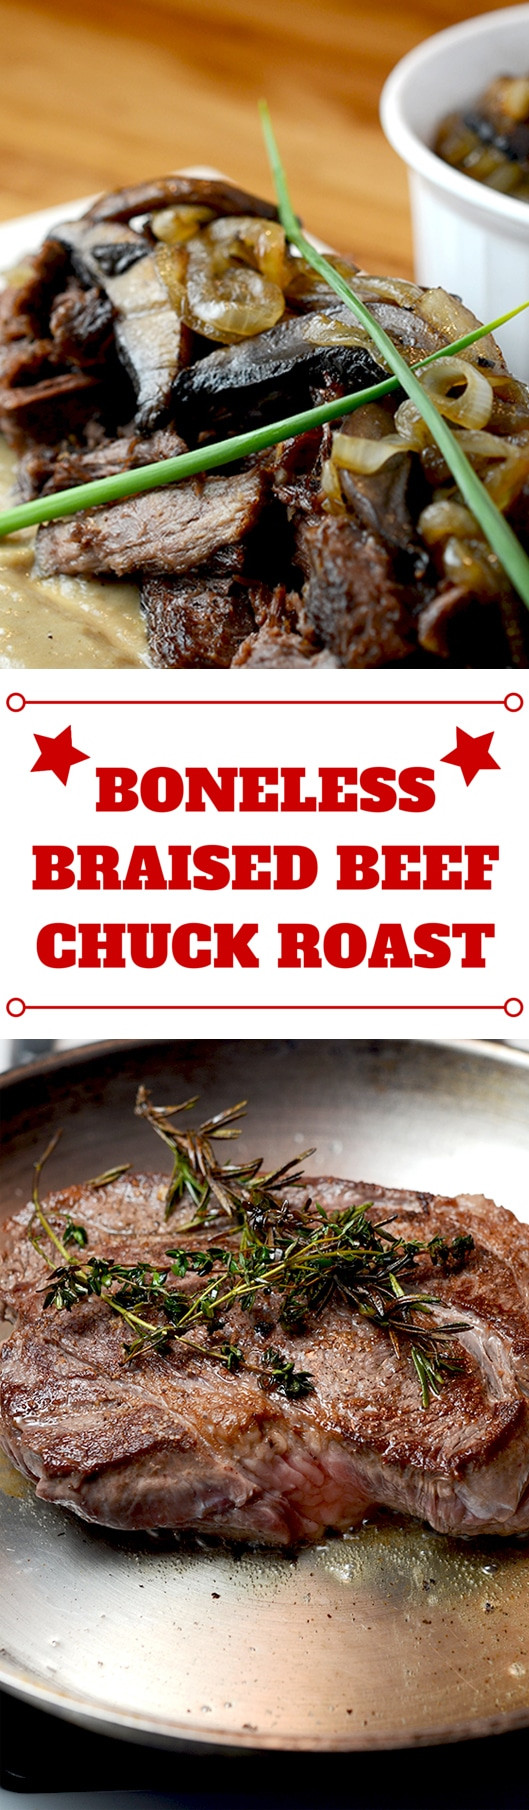 Boneless Chuck Roast Beef
 Boneless Beef Chuck Roast Recipe